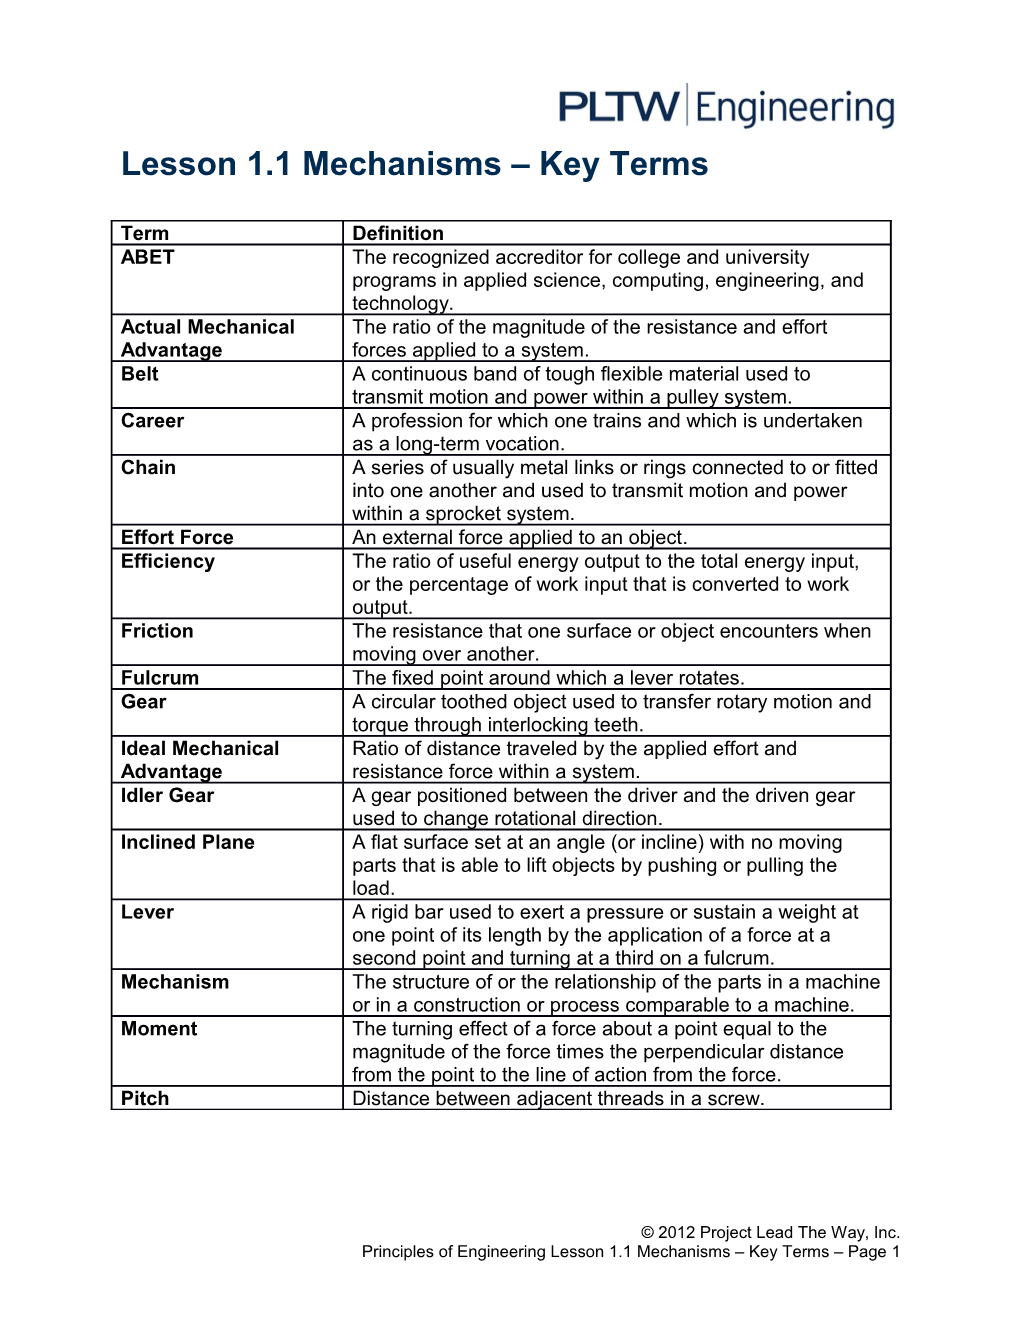 Lesson 1.1 Mechanisms Key Terms